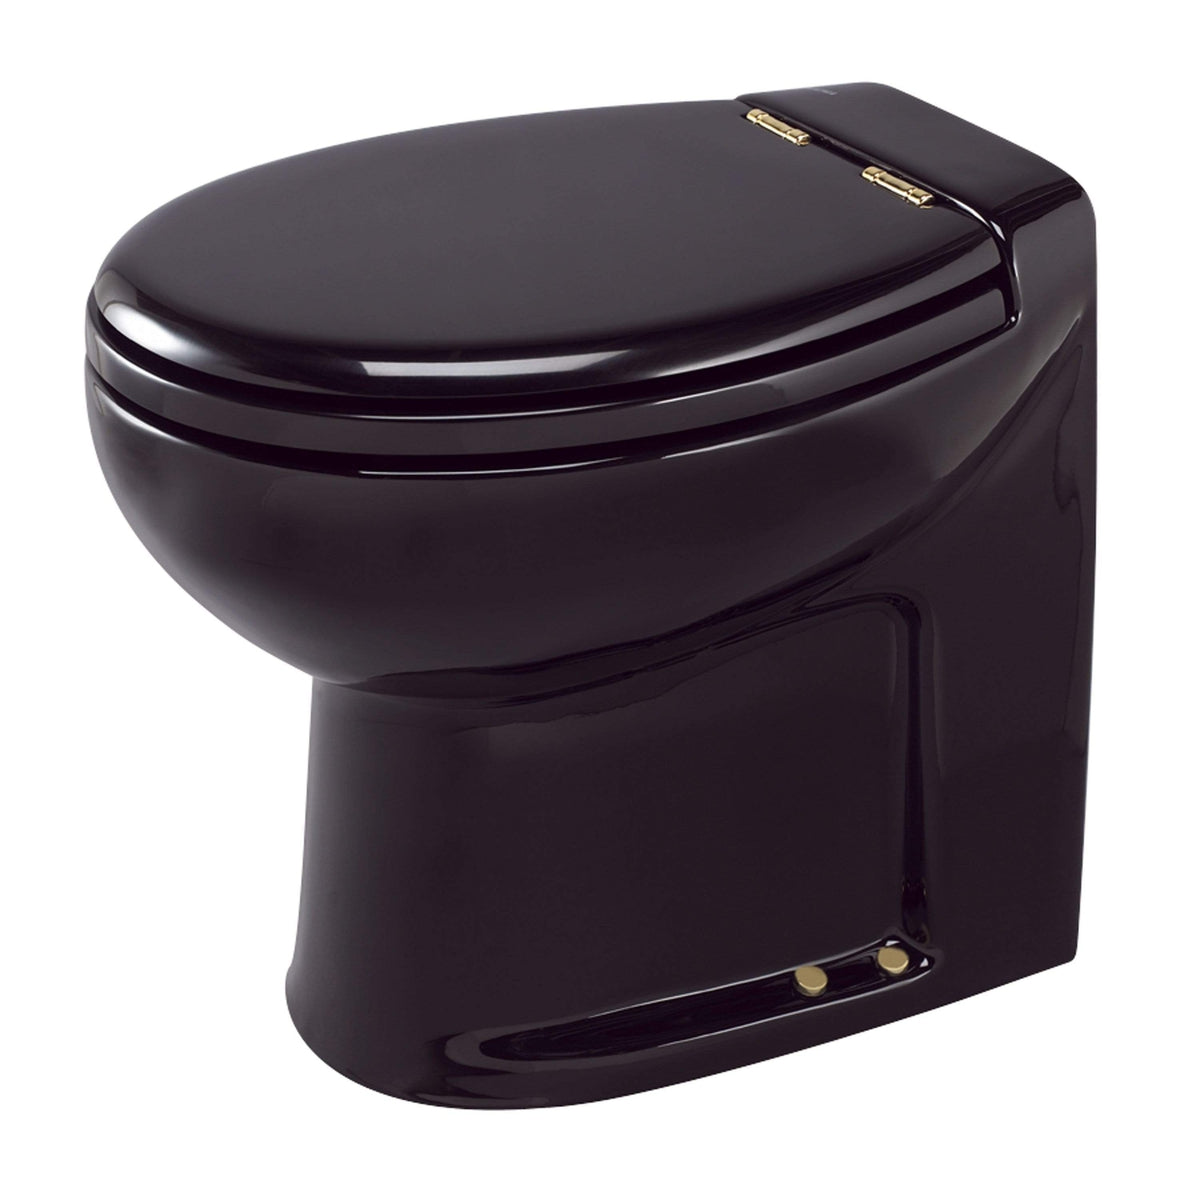 Thetford Not Qualified for Free Shipping Thetford Tecma Silence Plus 1 Mode 12v RV Toilet Black/Gold #38007